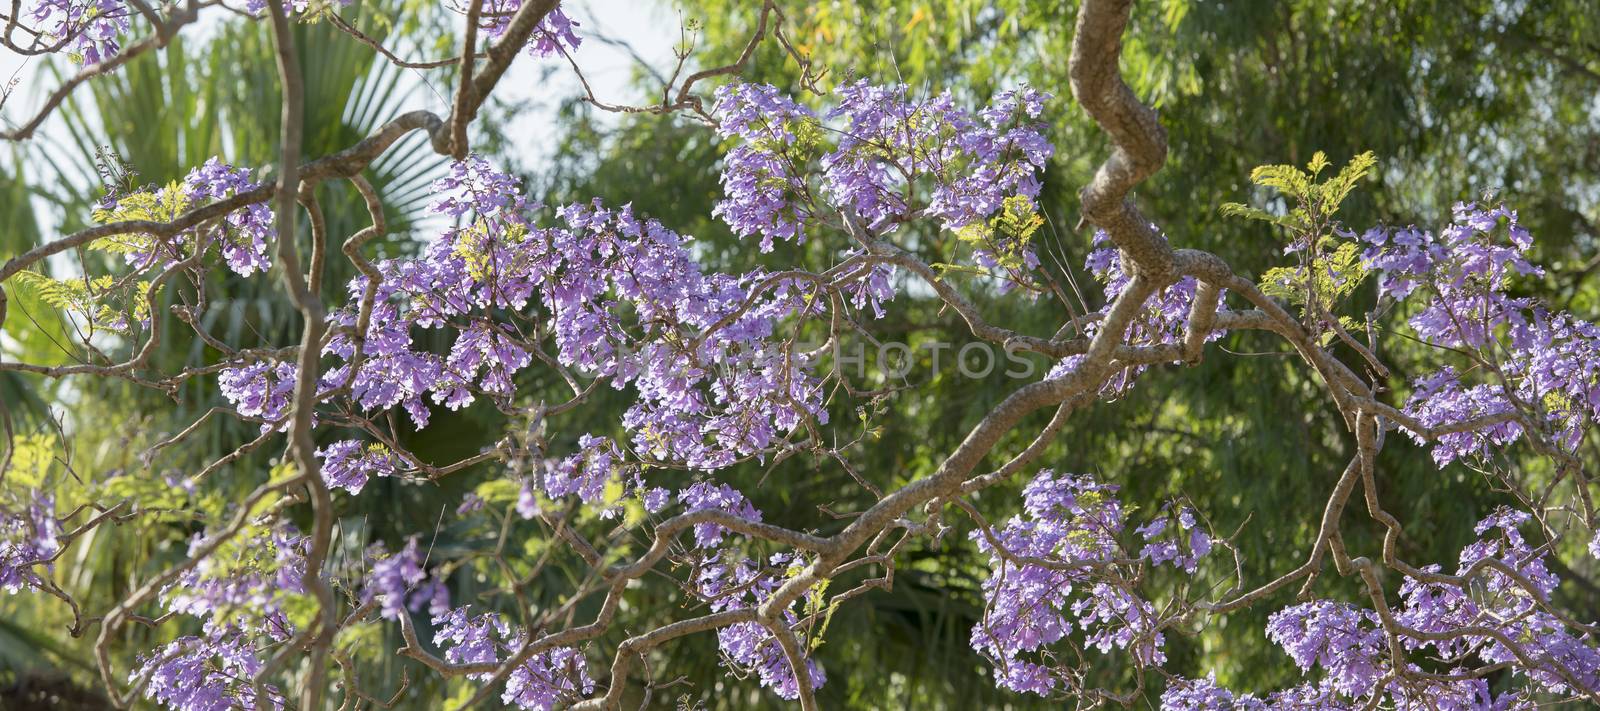 Colourful blooming jacaranda tree by artistrobd